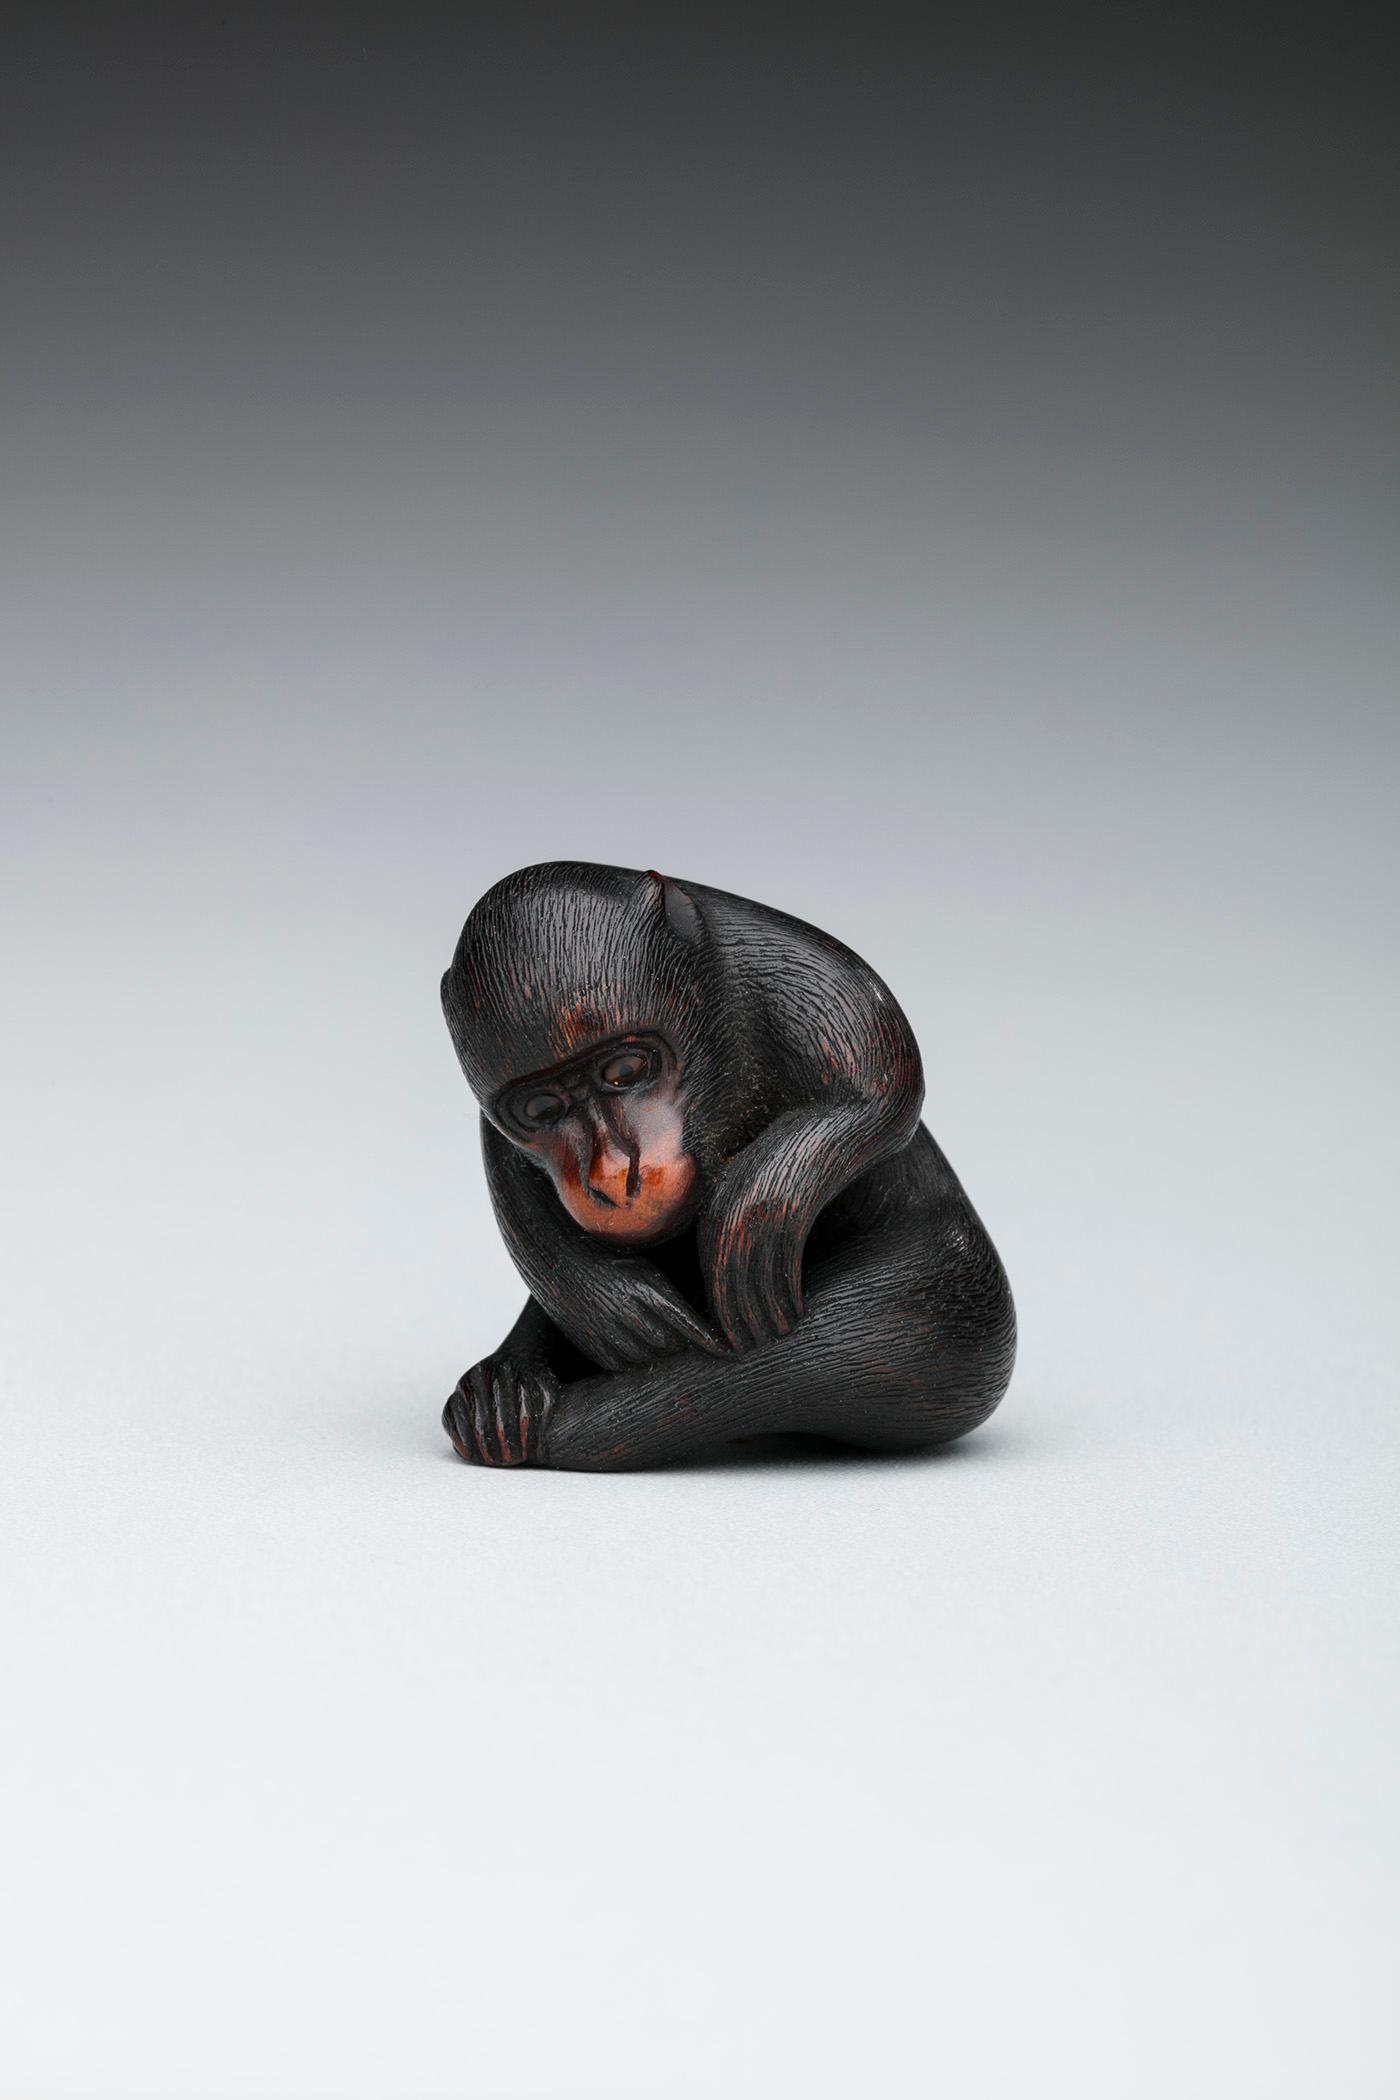 Netsuke: Seated Monkey Picking a Flea by Unknown Artist - 19th century Toledo Museum of Art